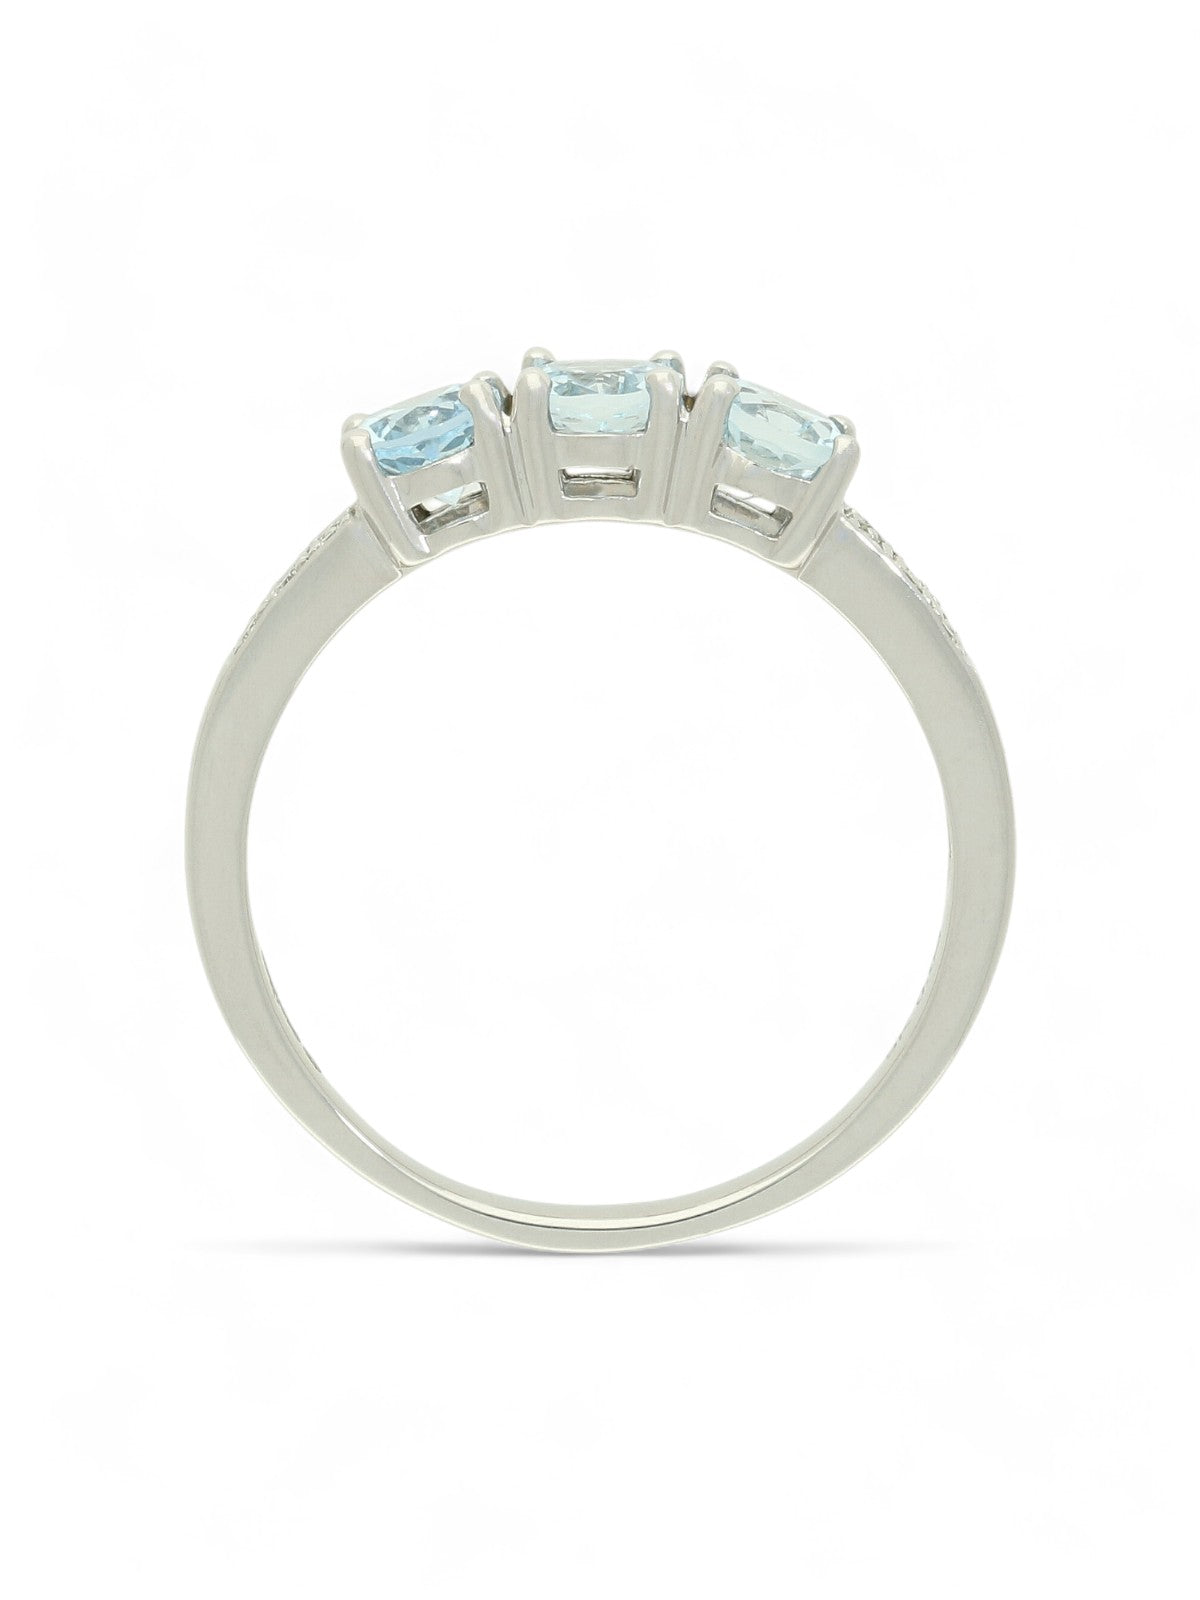 Aquamarine Three Stone Ring with Diamond Set Shoulders in 9ct White Gold